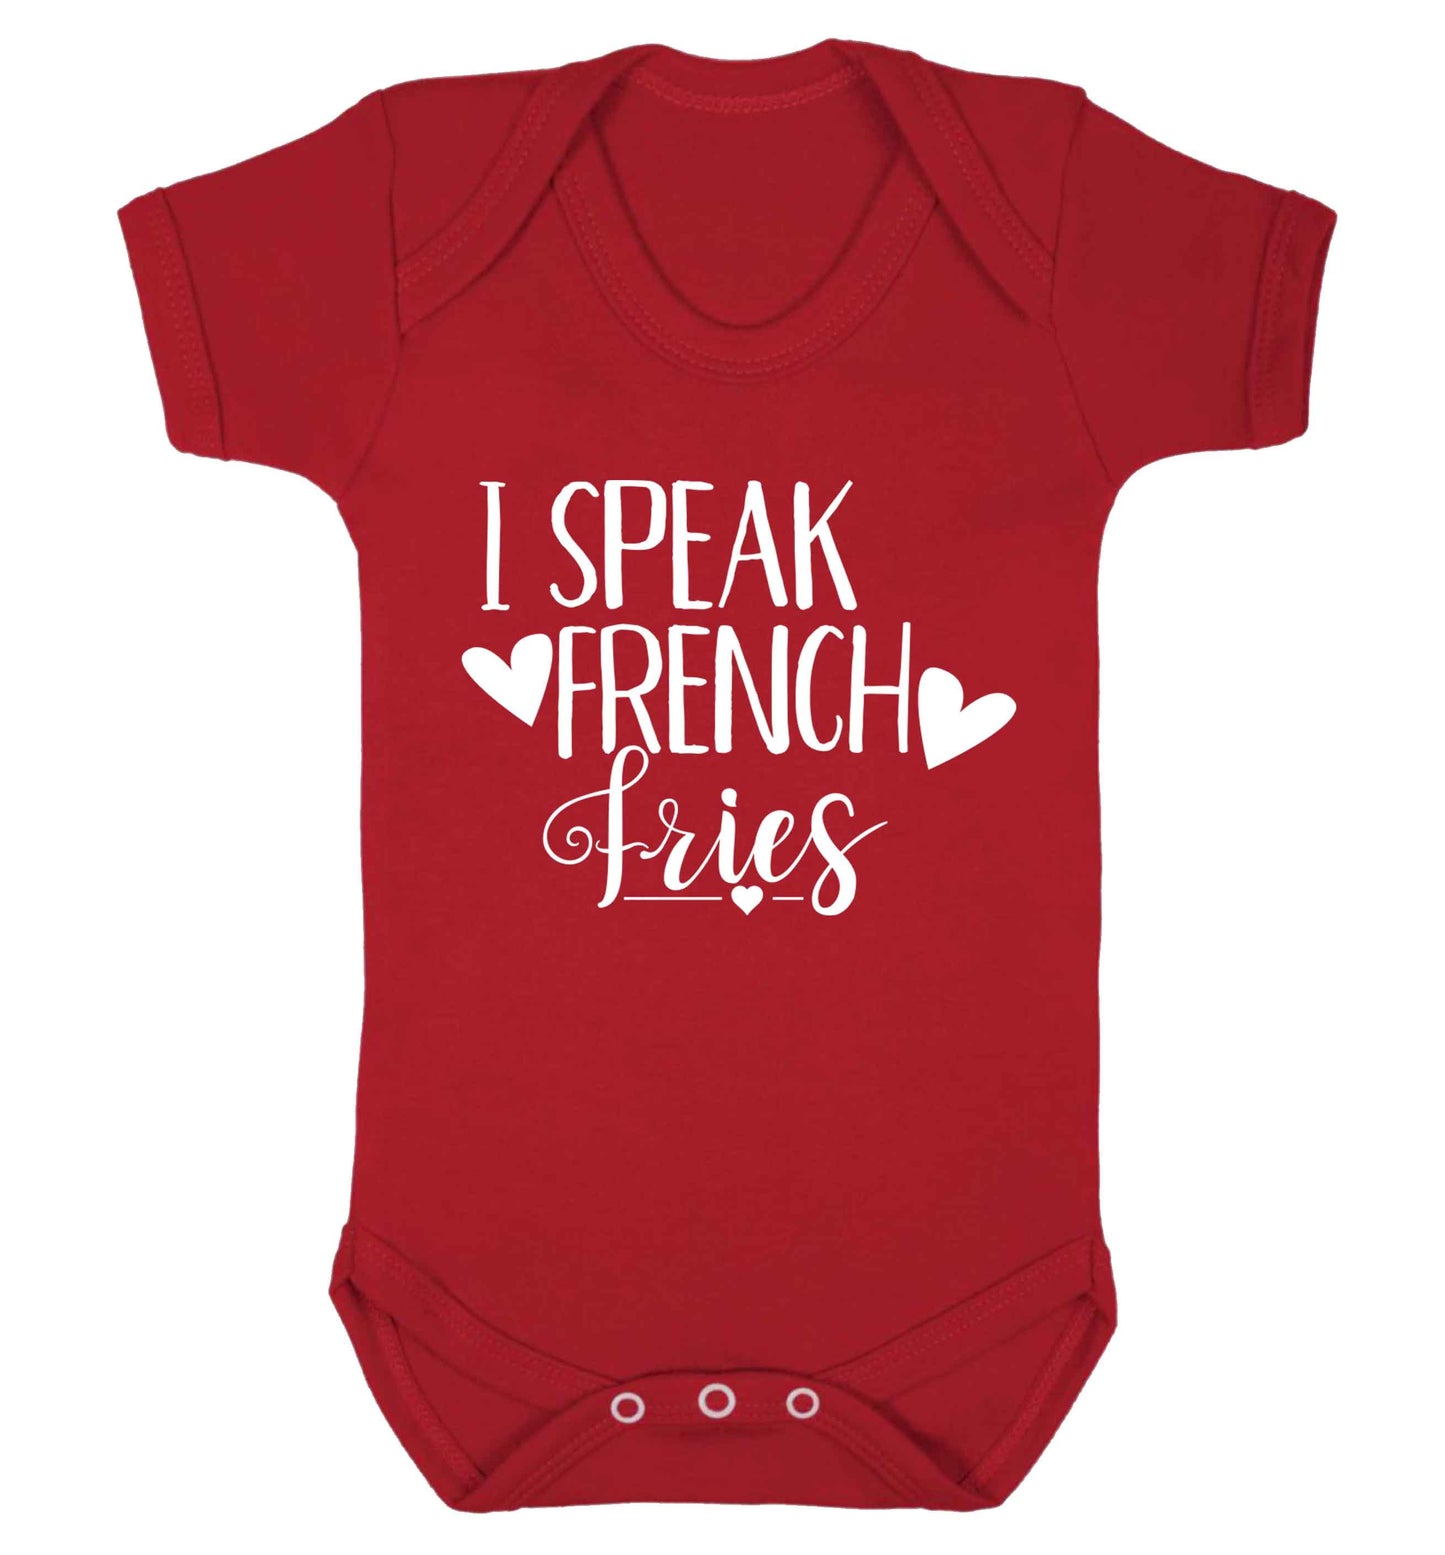 I speak French fries Baby Vest red 18-24 months